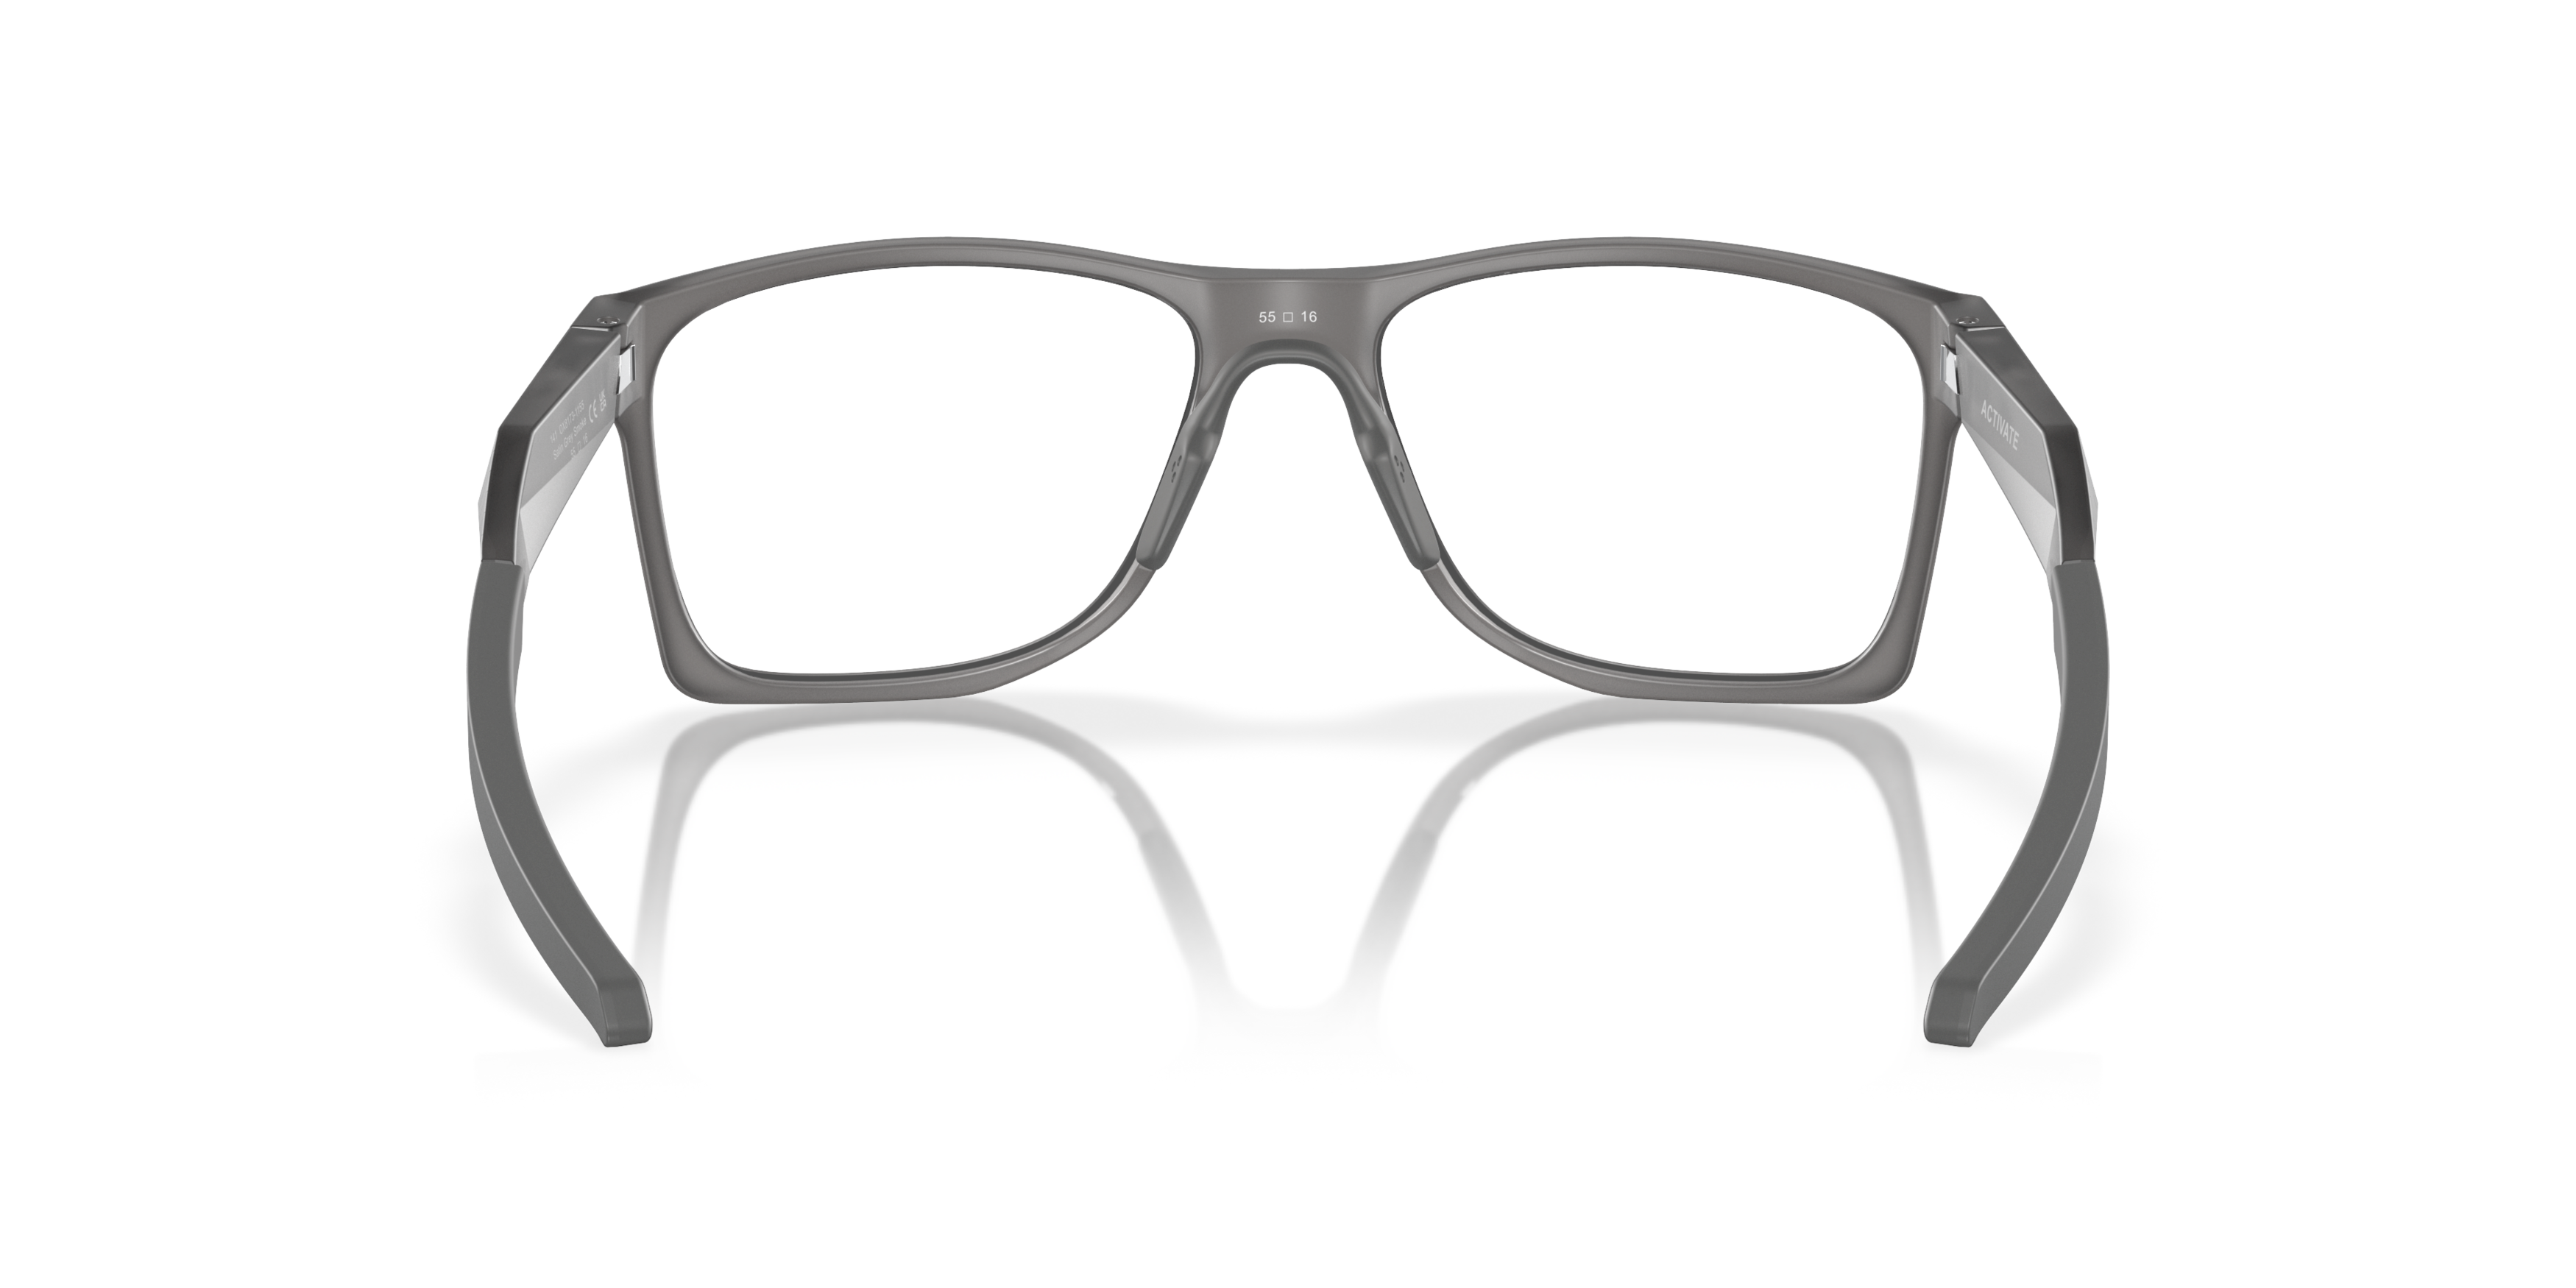 Detail02 Oakley OX 8173 Glasses Transparent / transparent, clear